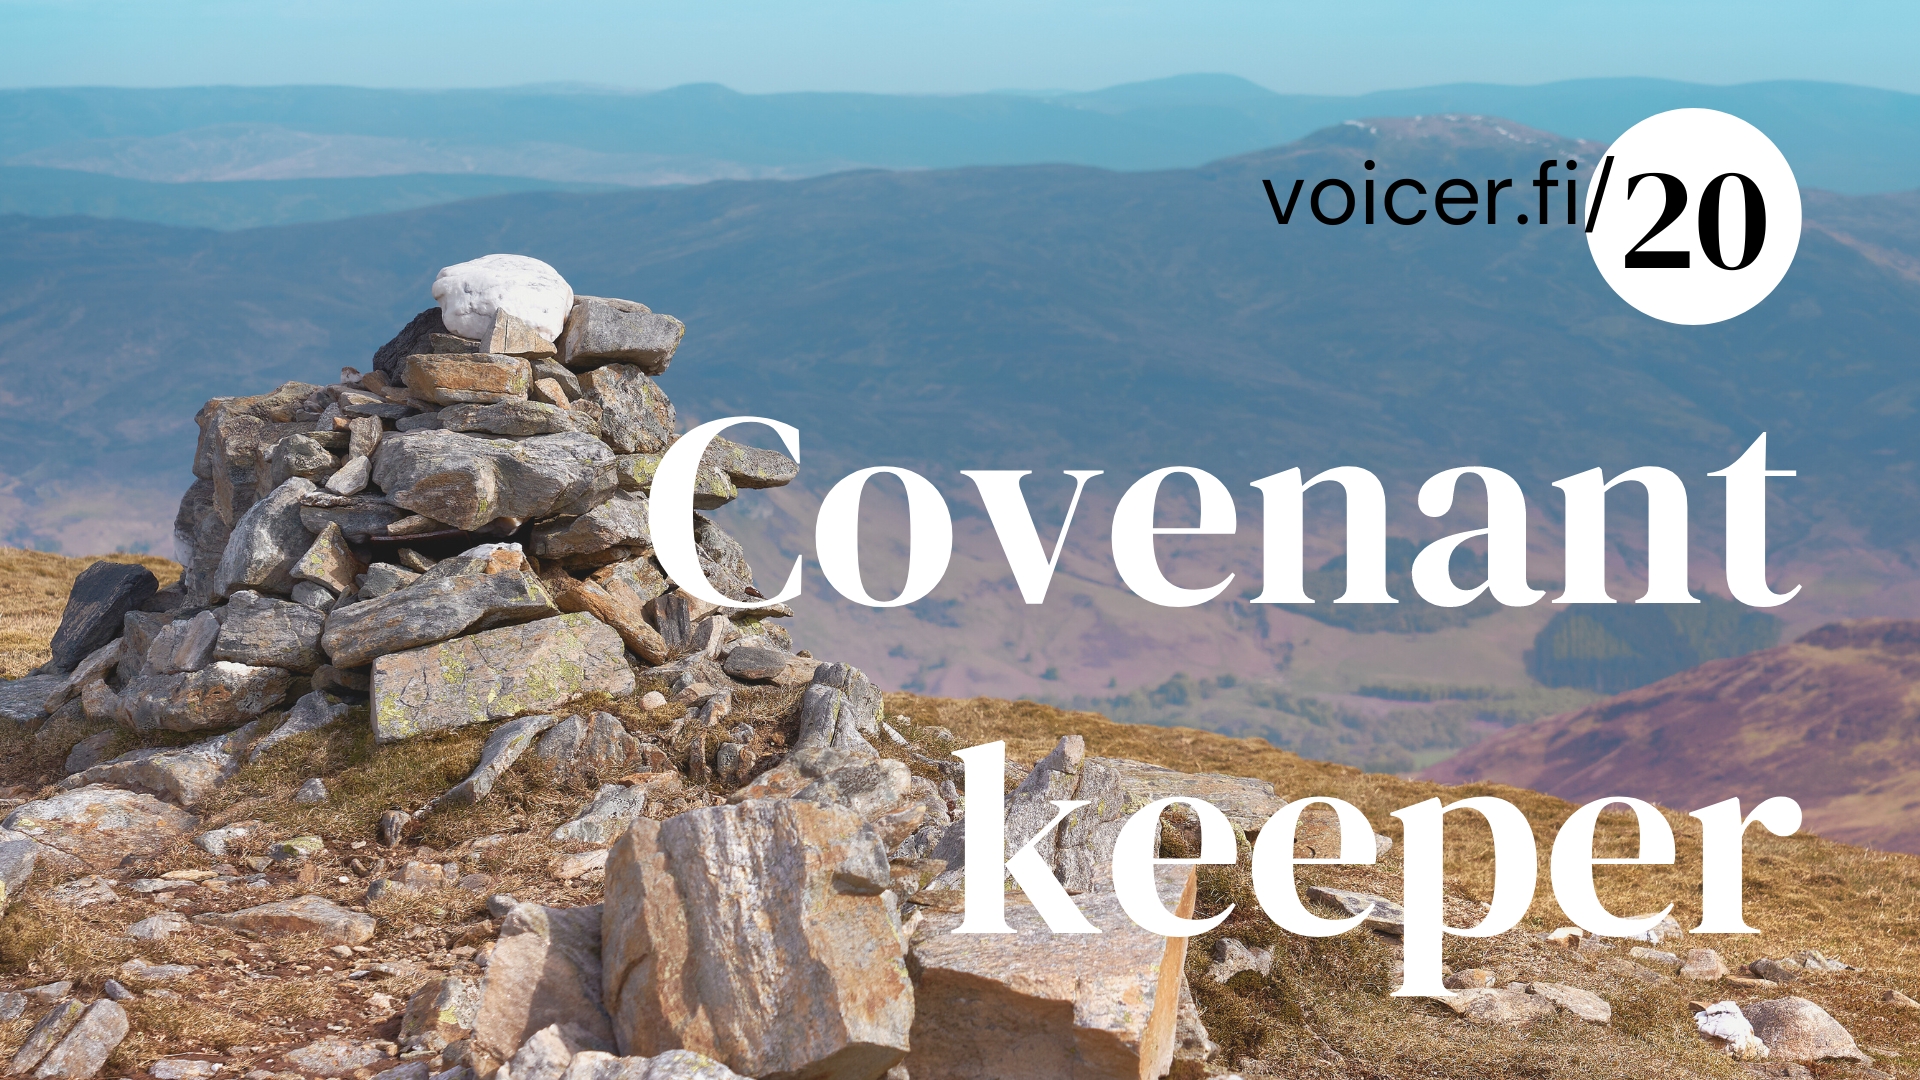 Covenant Keeper